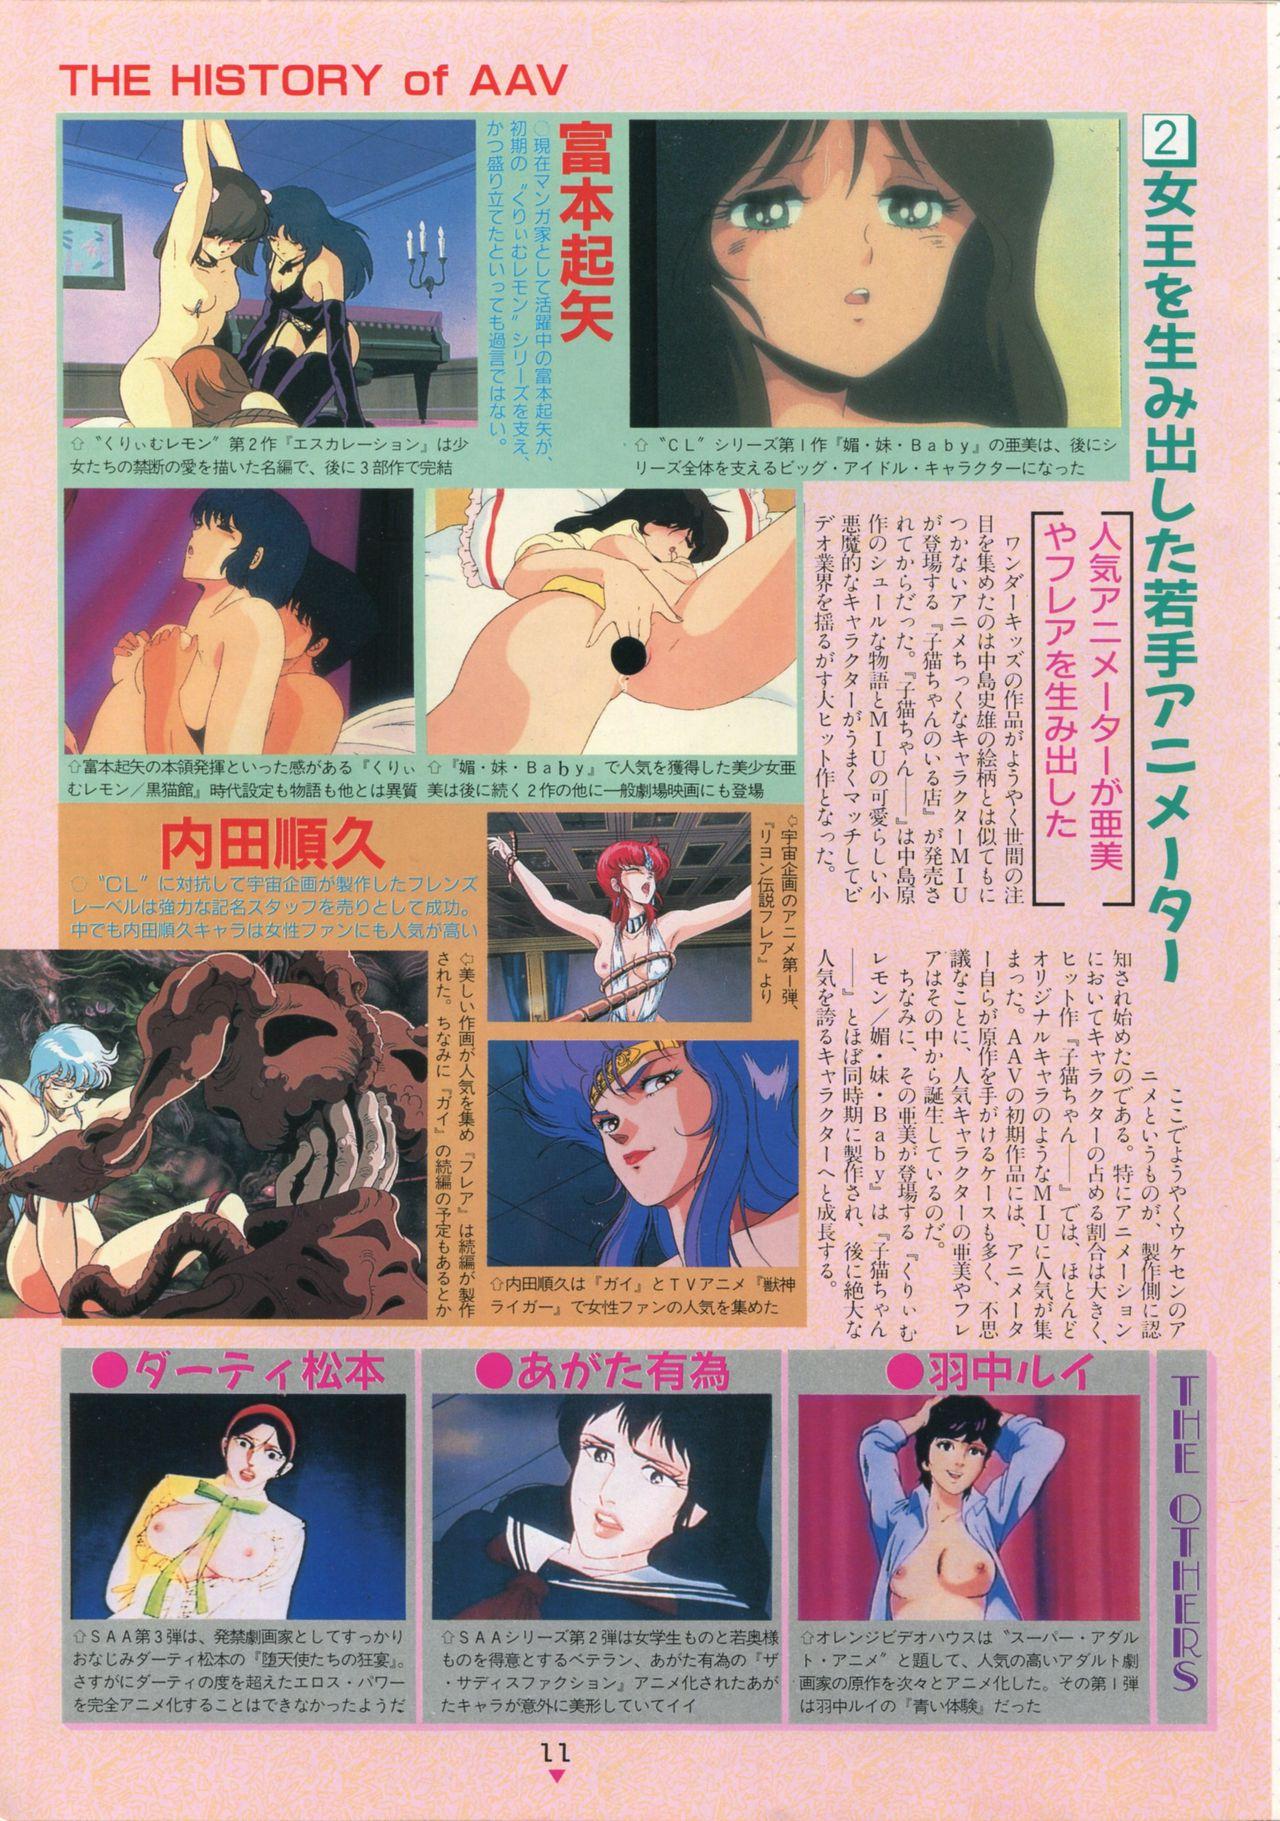 Bishoujo Anime Daizenshuu - Adult Animation Video Catalog 1991 6